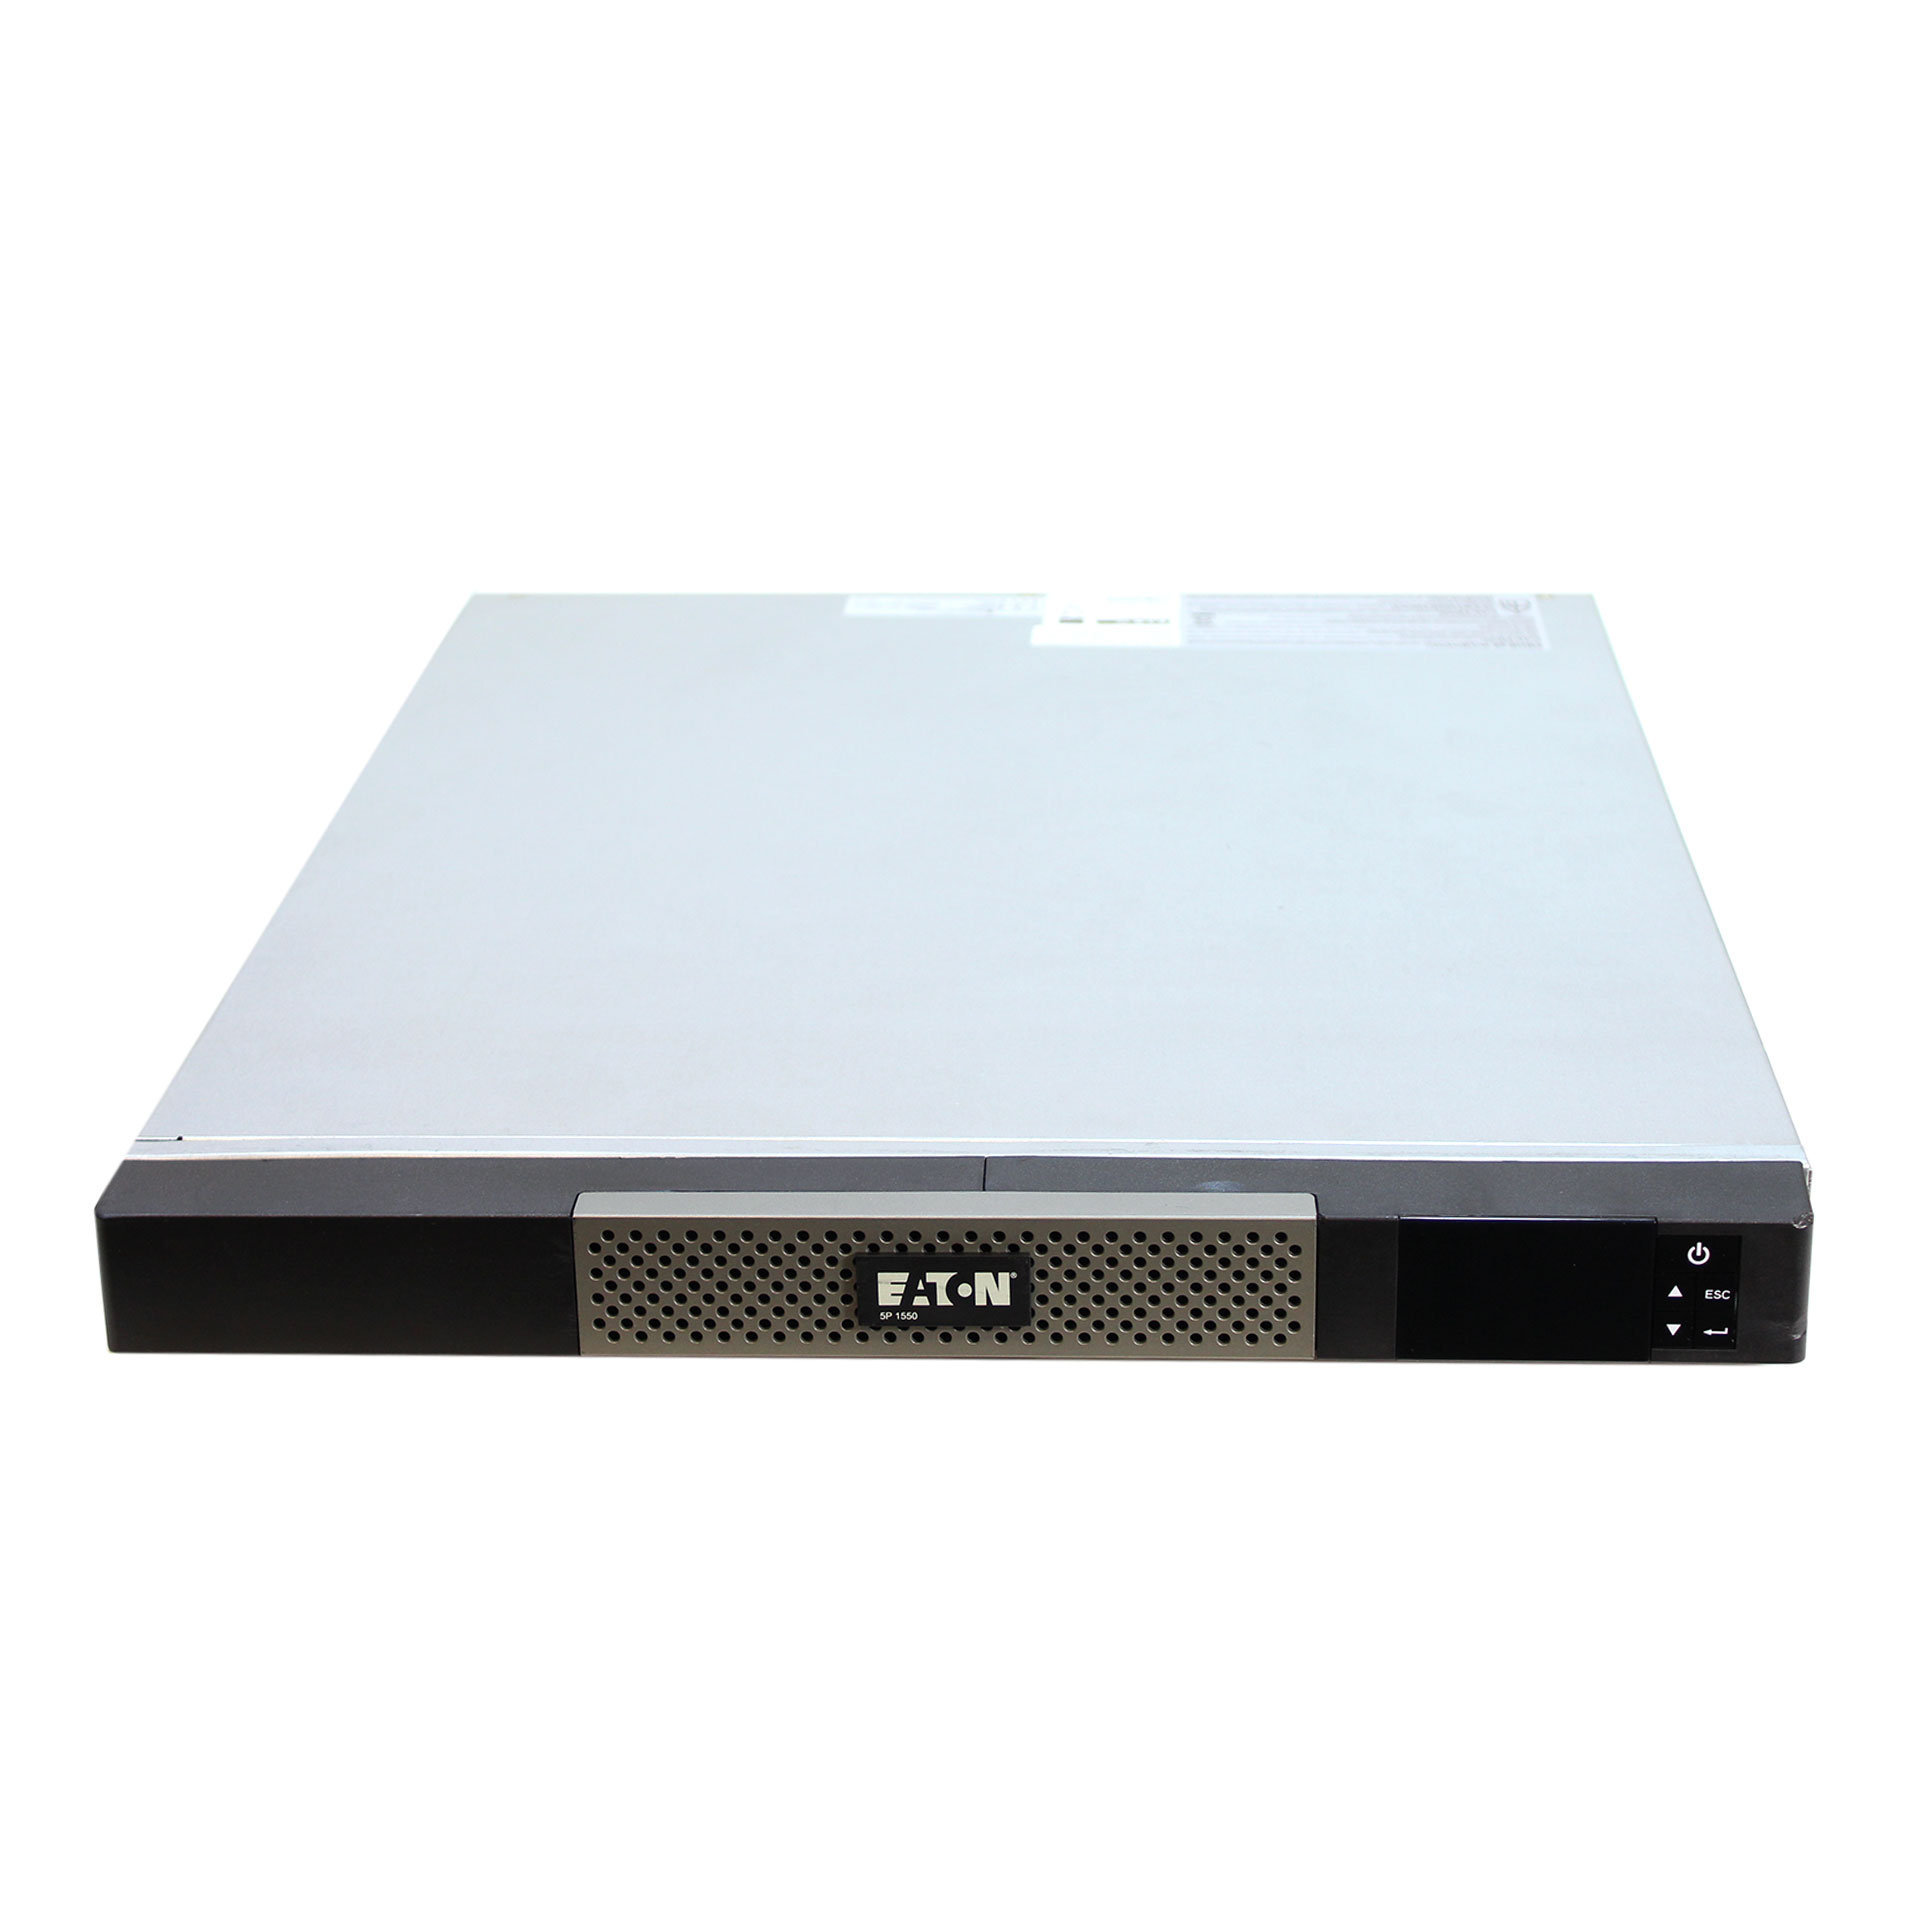 Eaton 5P1550GR RM UPS 1100W 1550VA AC 208/230V, RS-232, 1U